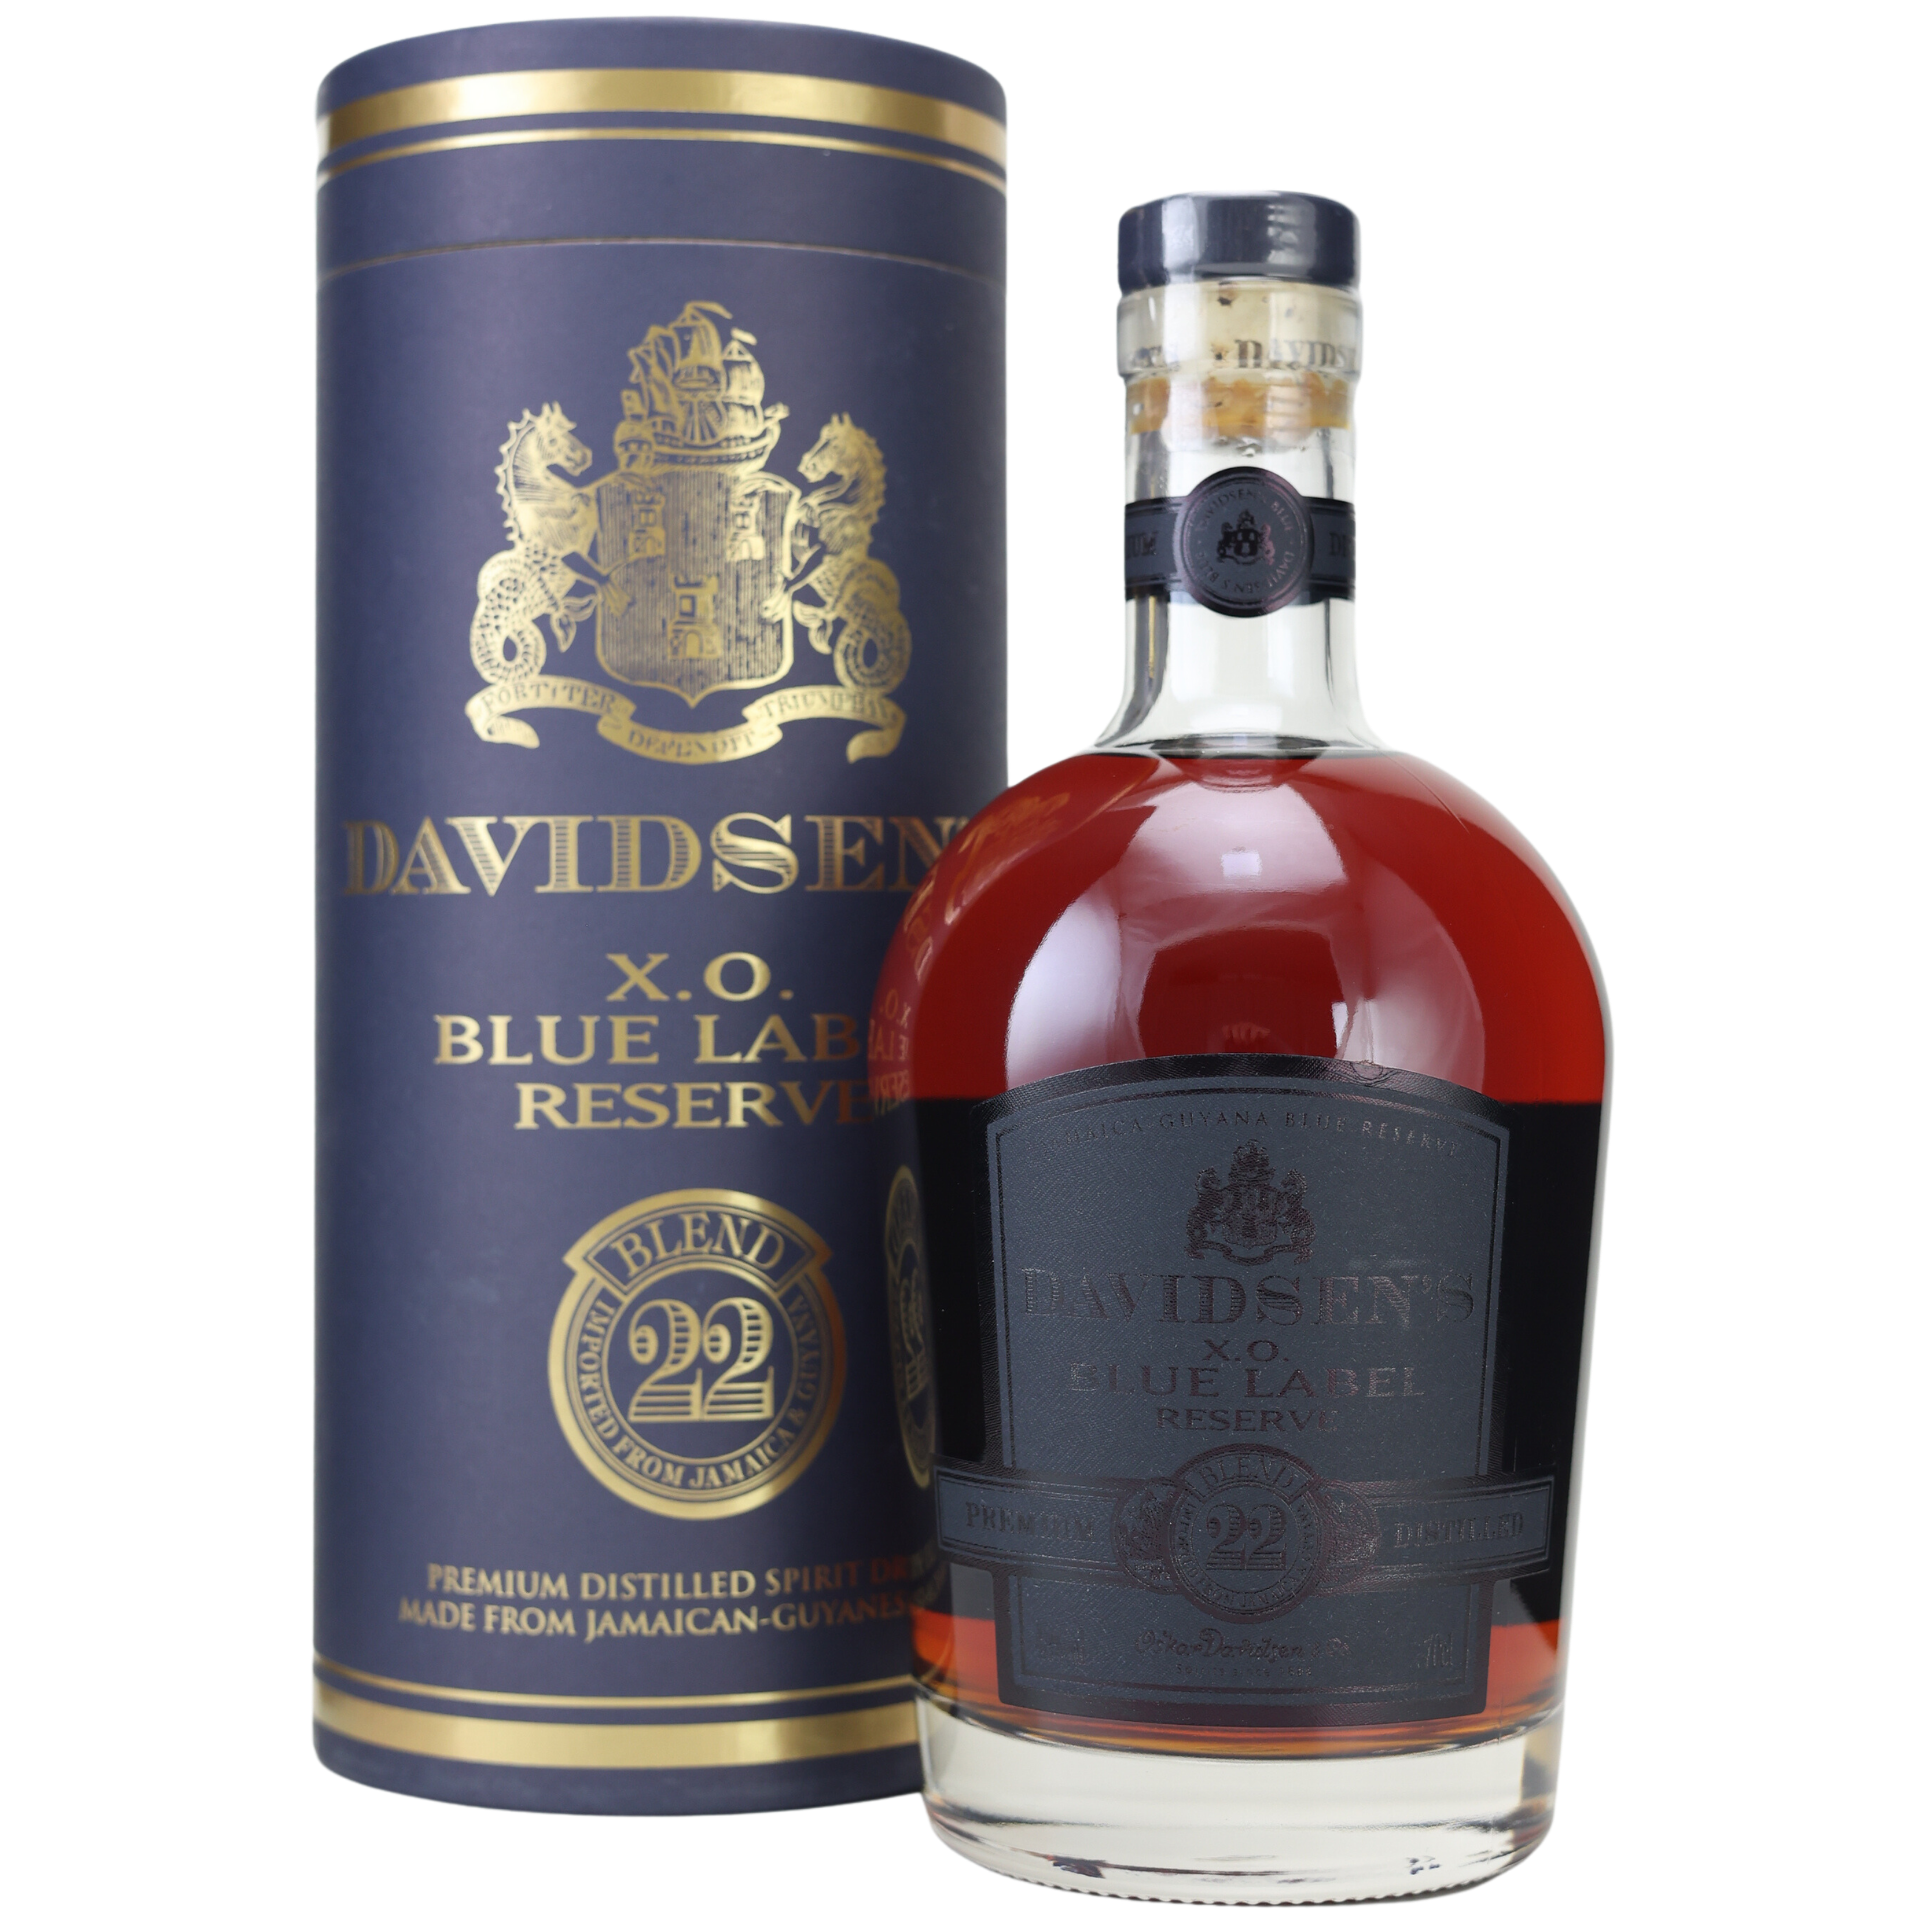 Davidsen´s  XO 22 Blue Label Reserve (Rum-Basis) 42% 0,7l